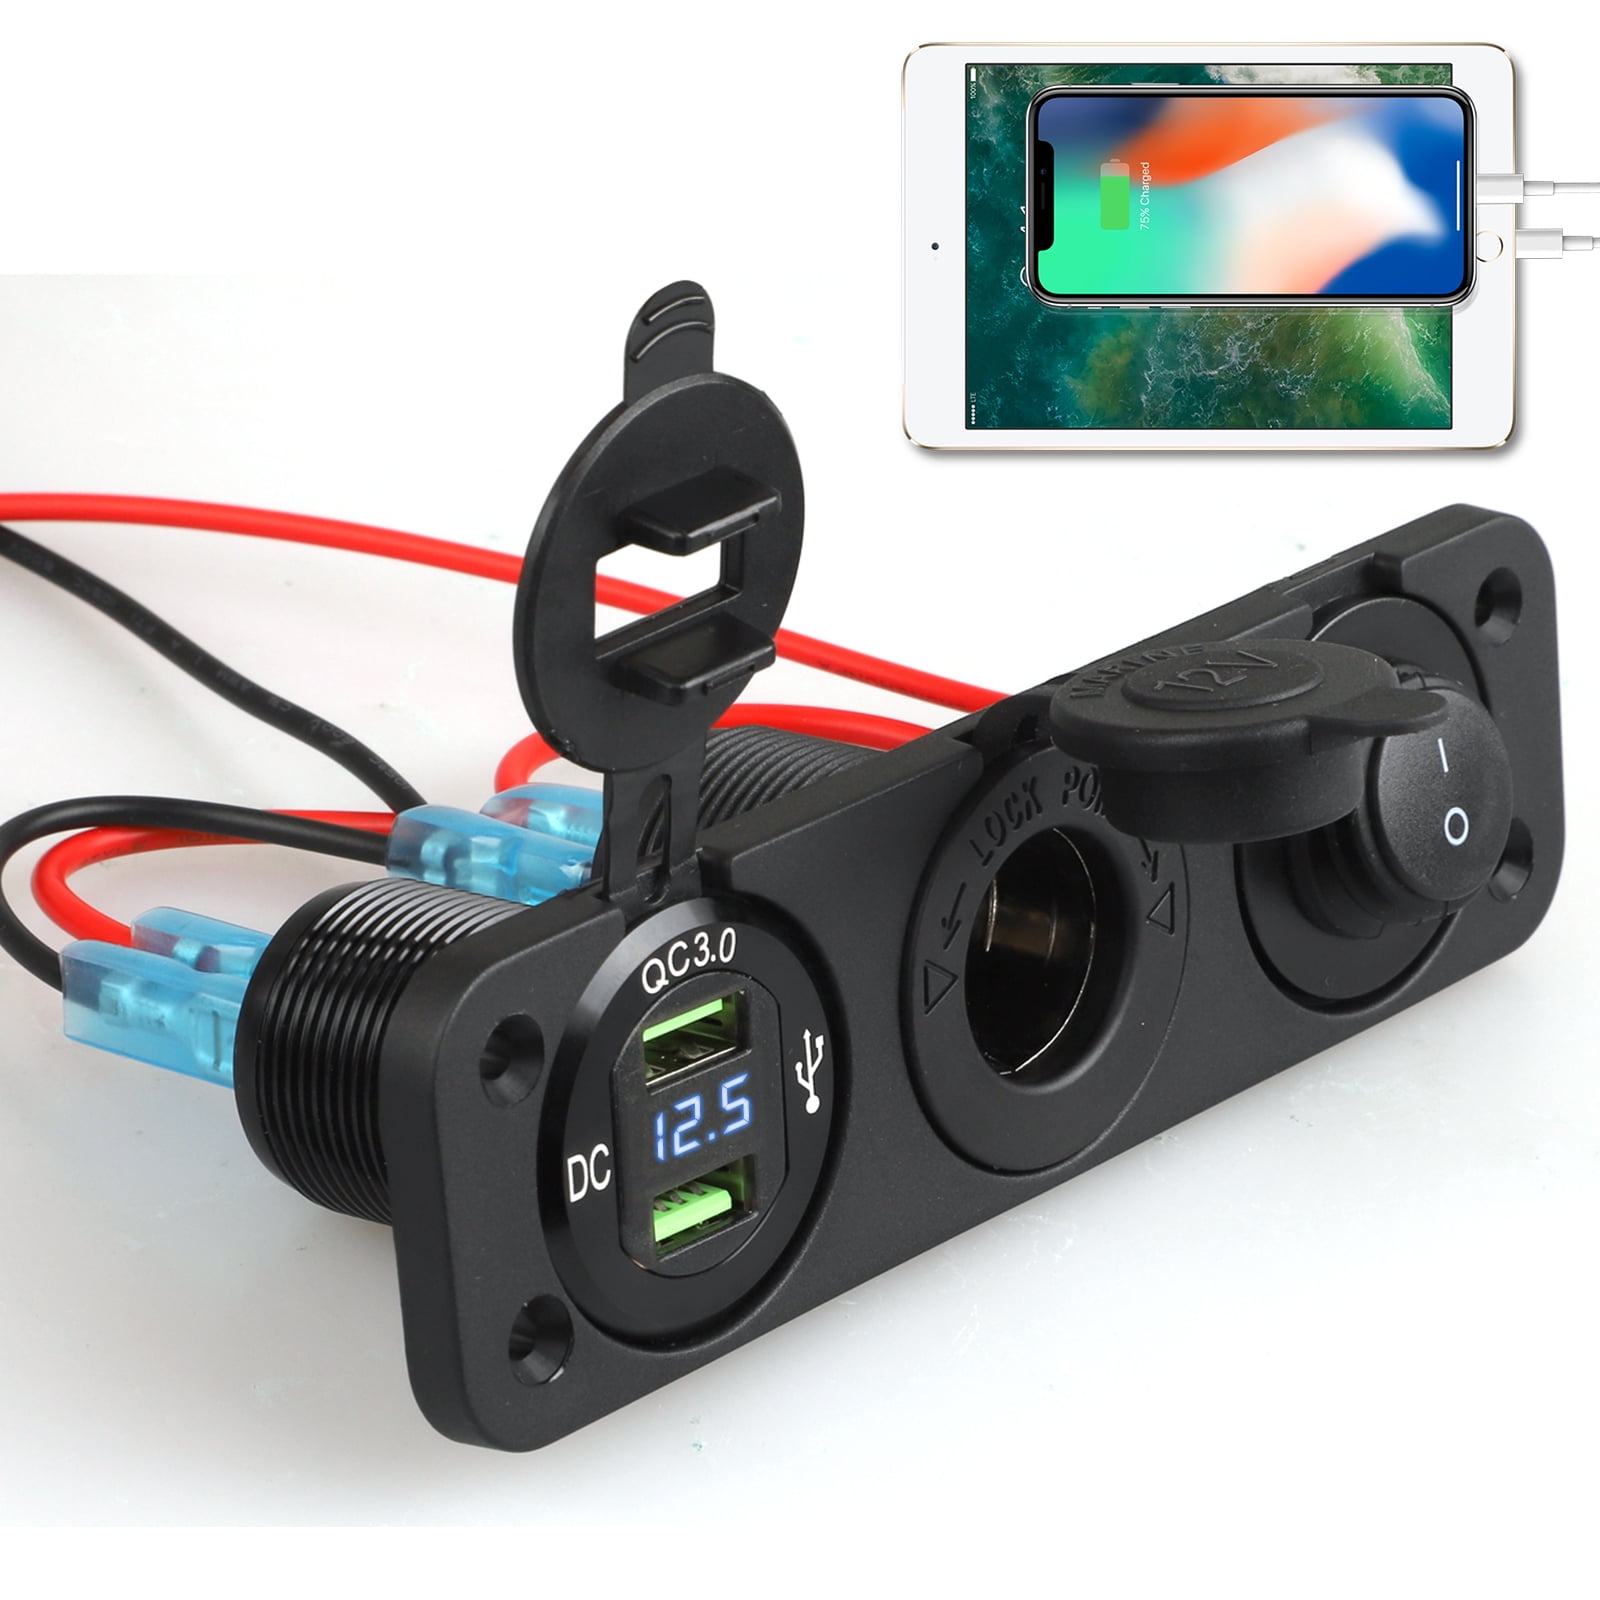 Waterproof Motorcycle Dual USB Charger Outlet Power Socket LED Digital Voltmeter